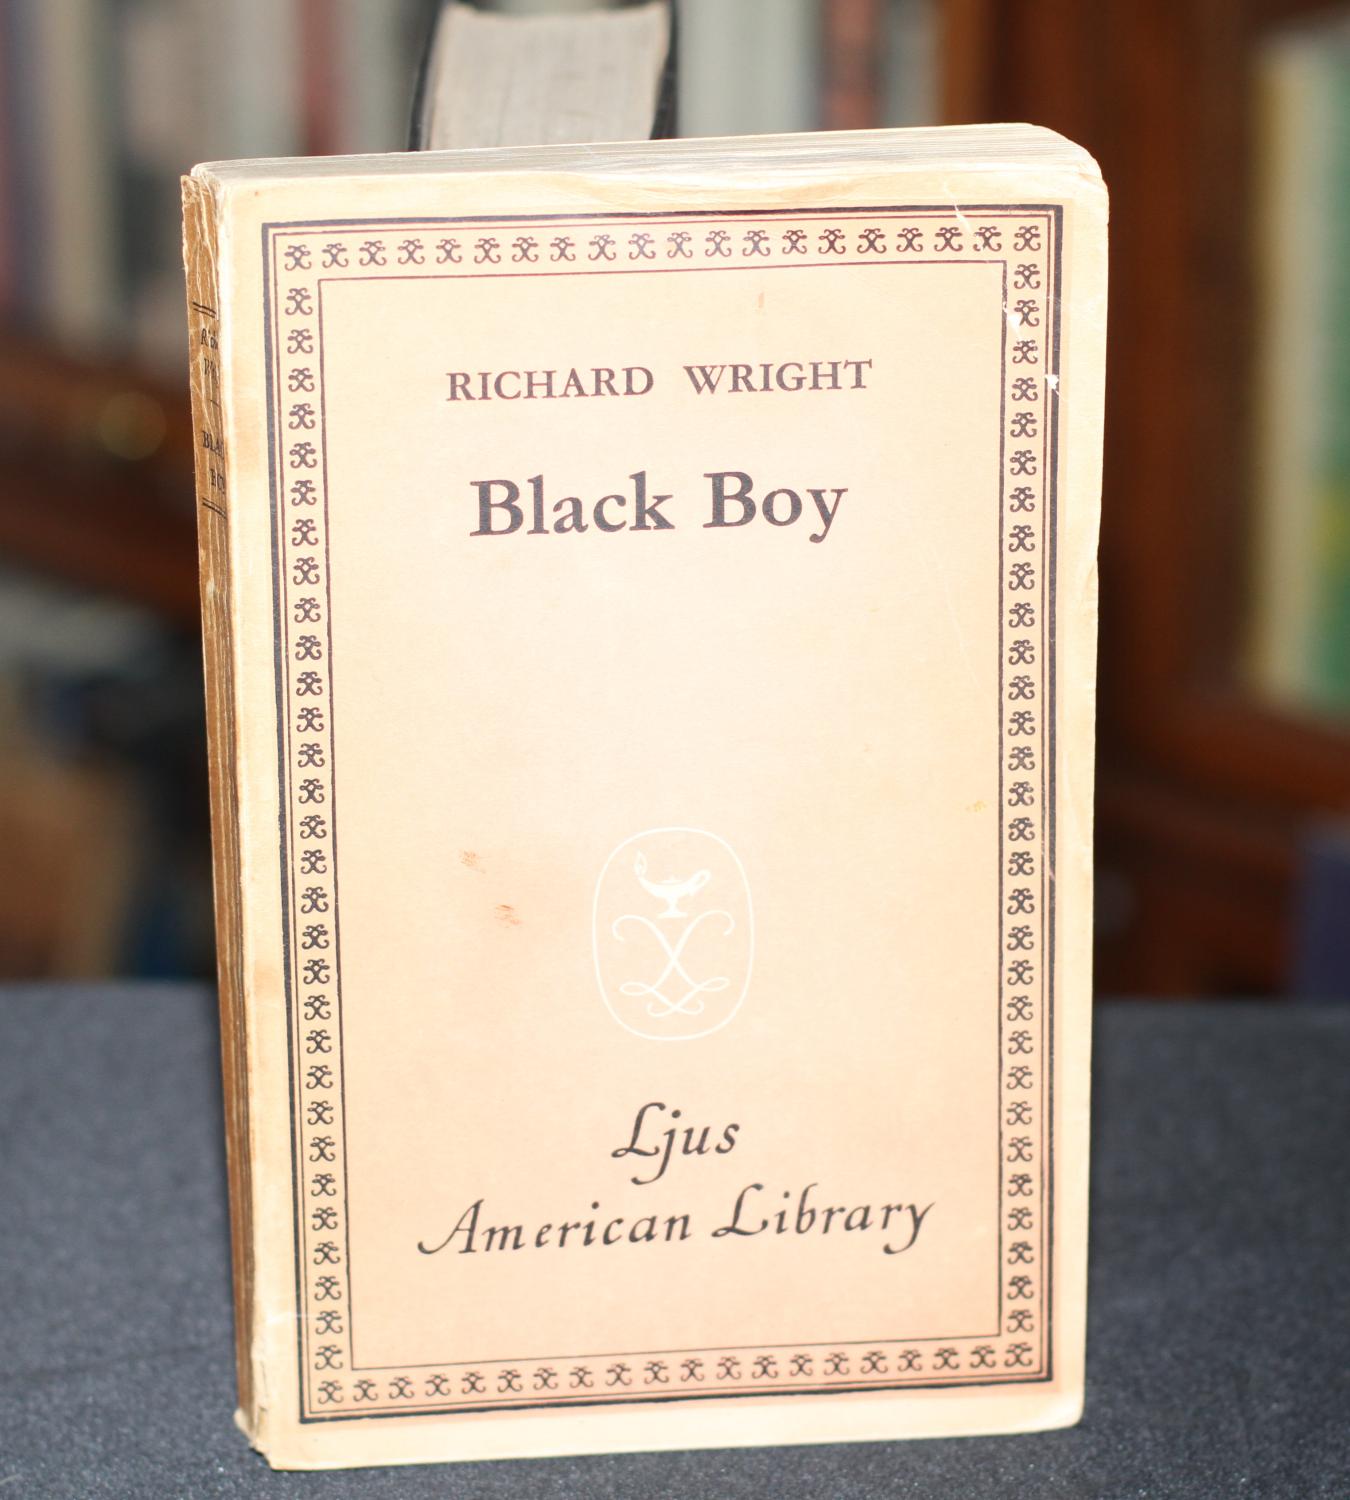 Black Boy by Richard Wright - AbeBooks